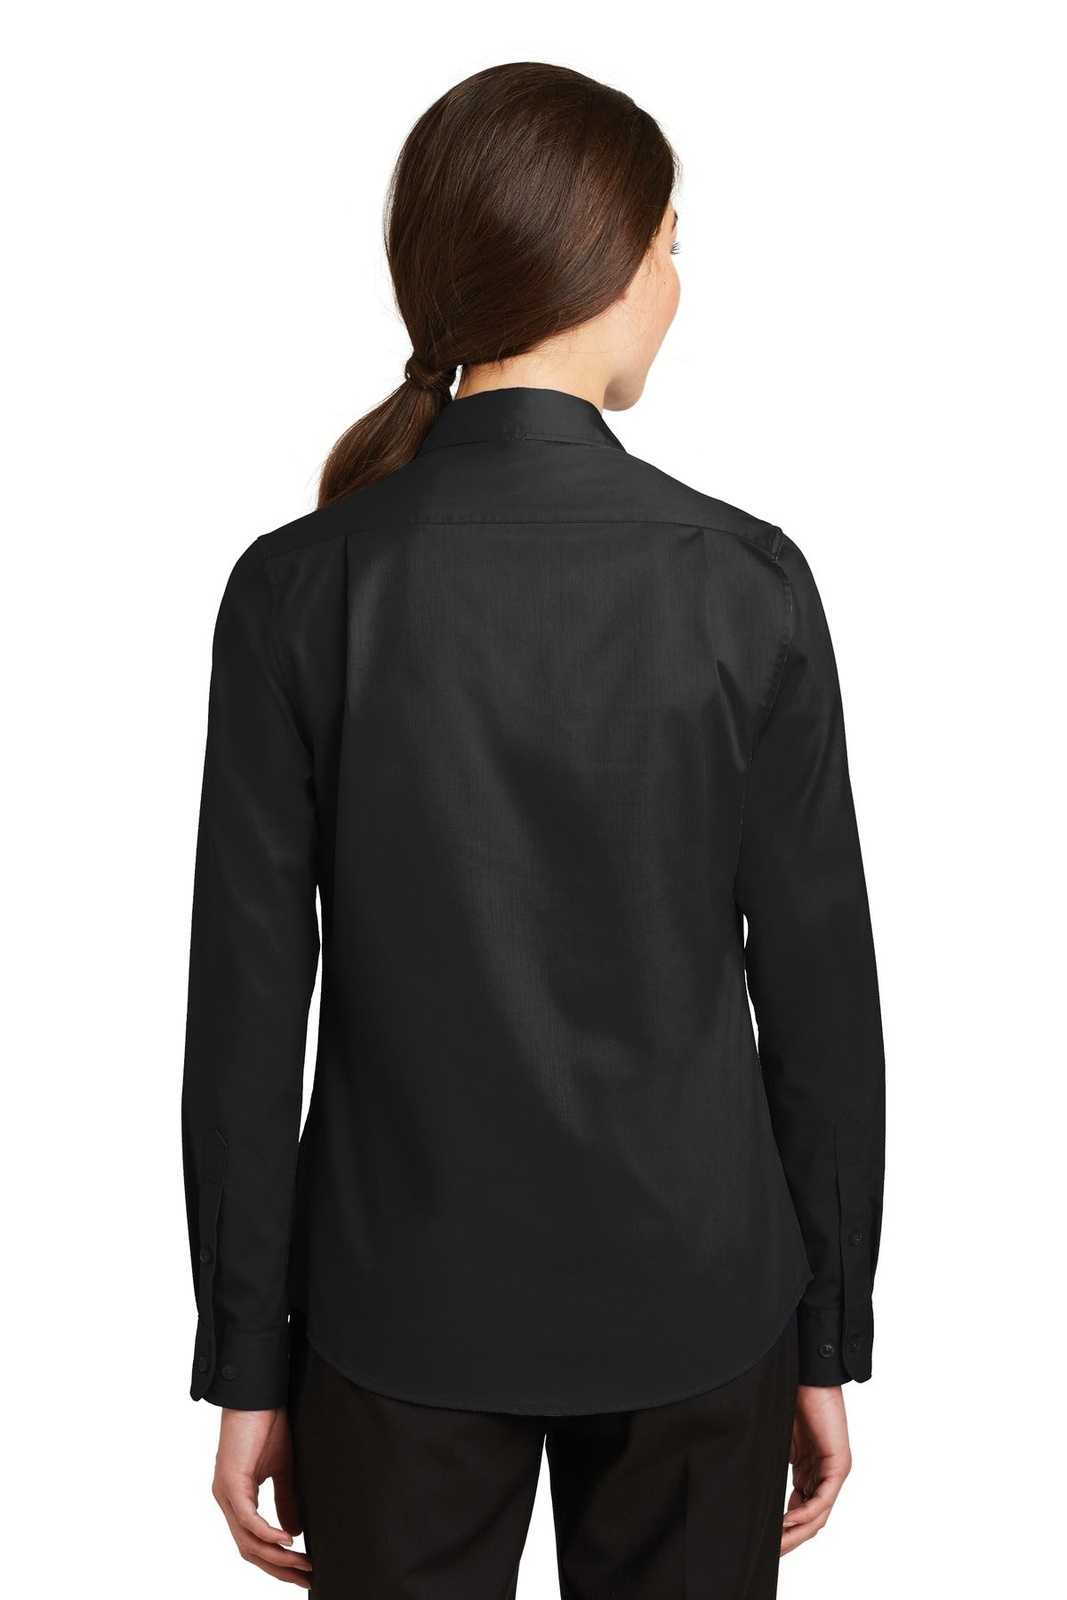 Port Authority L663 Ladies Superpro Twill Shirt - Black - HIT a Double - 1